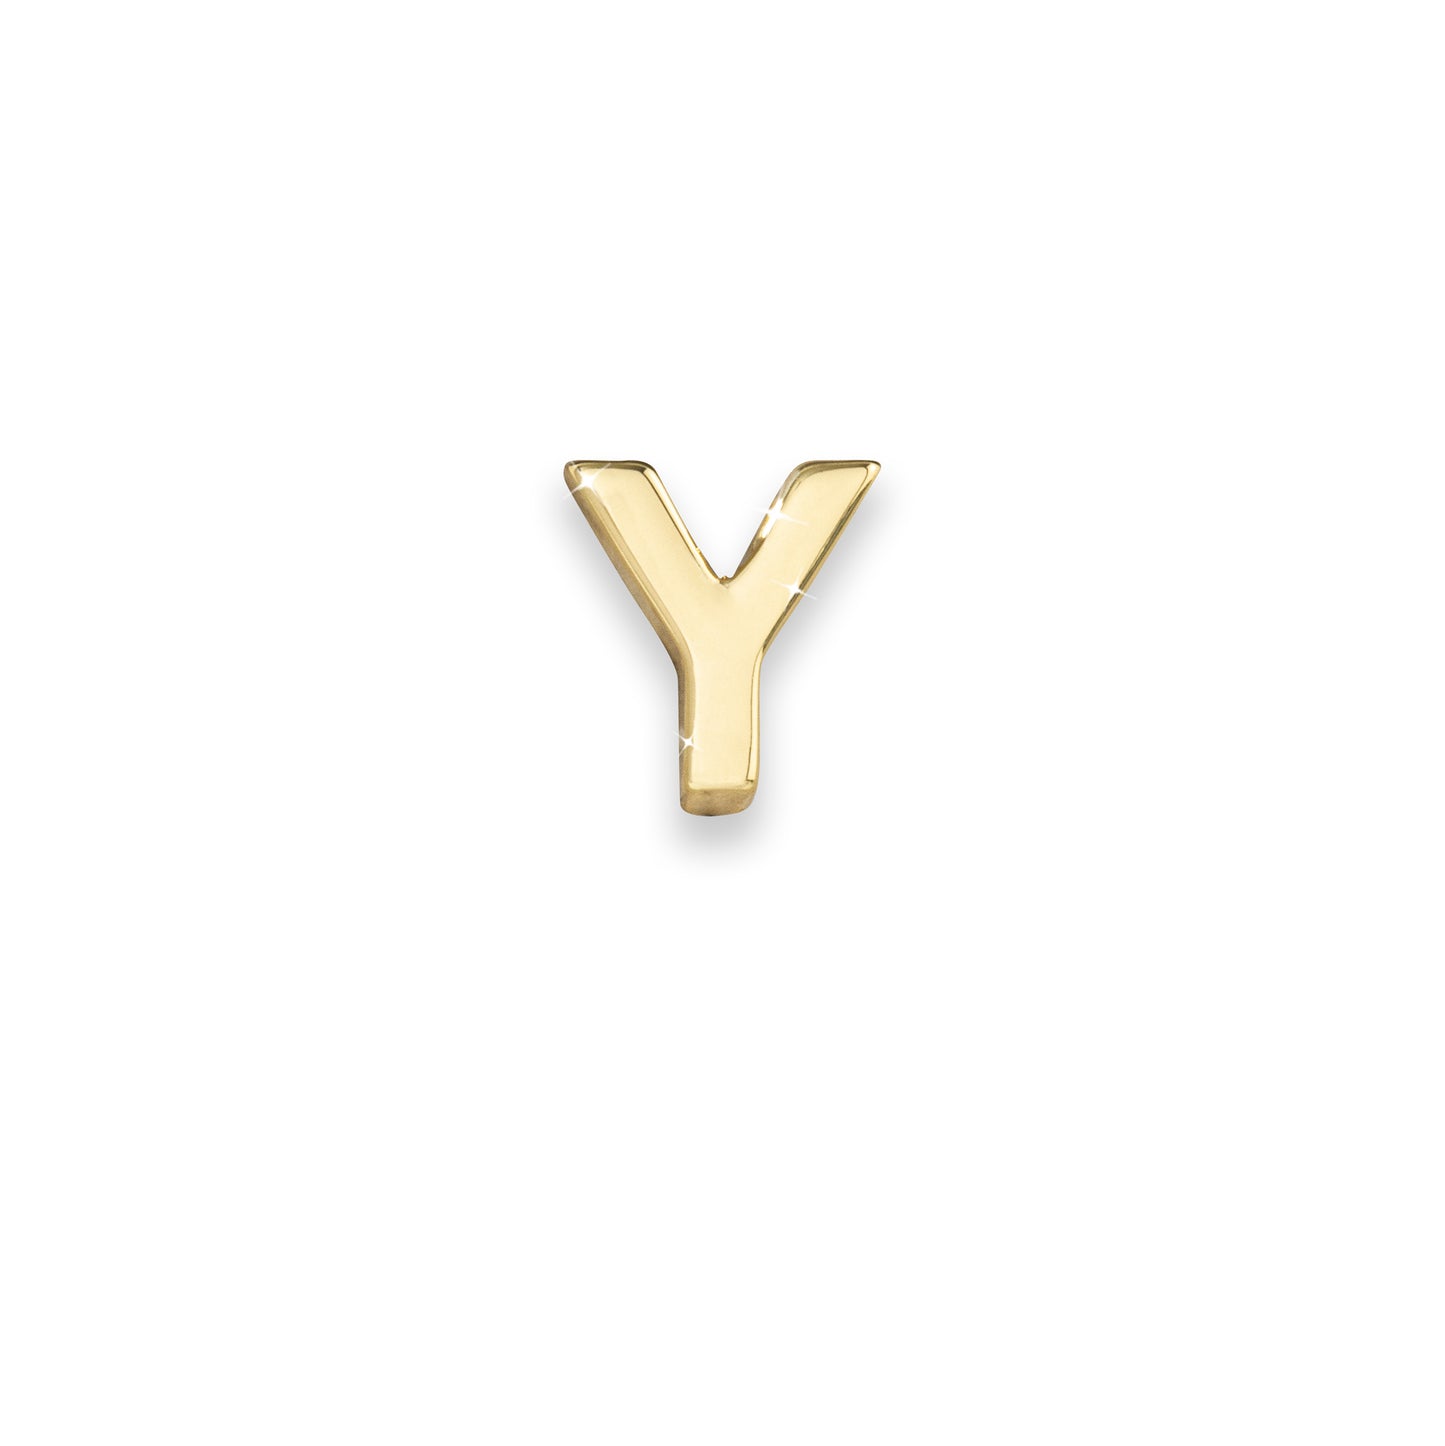 Gold letter Y monogram charm for necklaces & bracelets